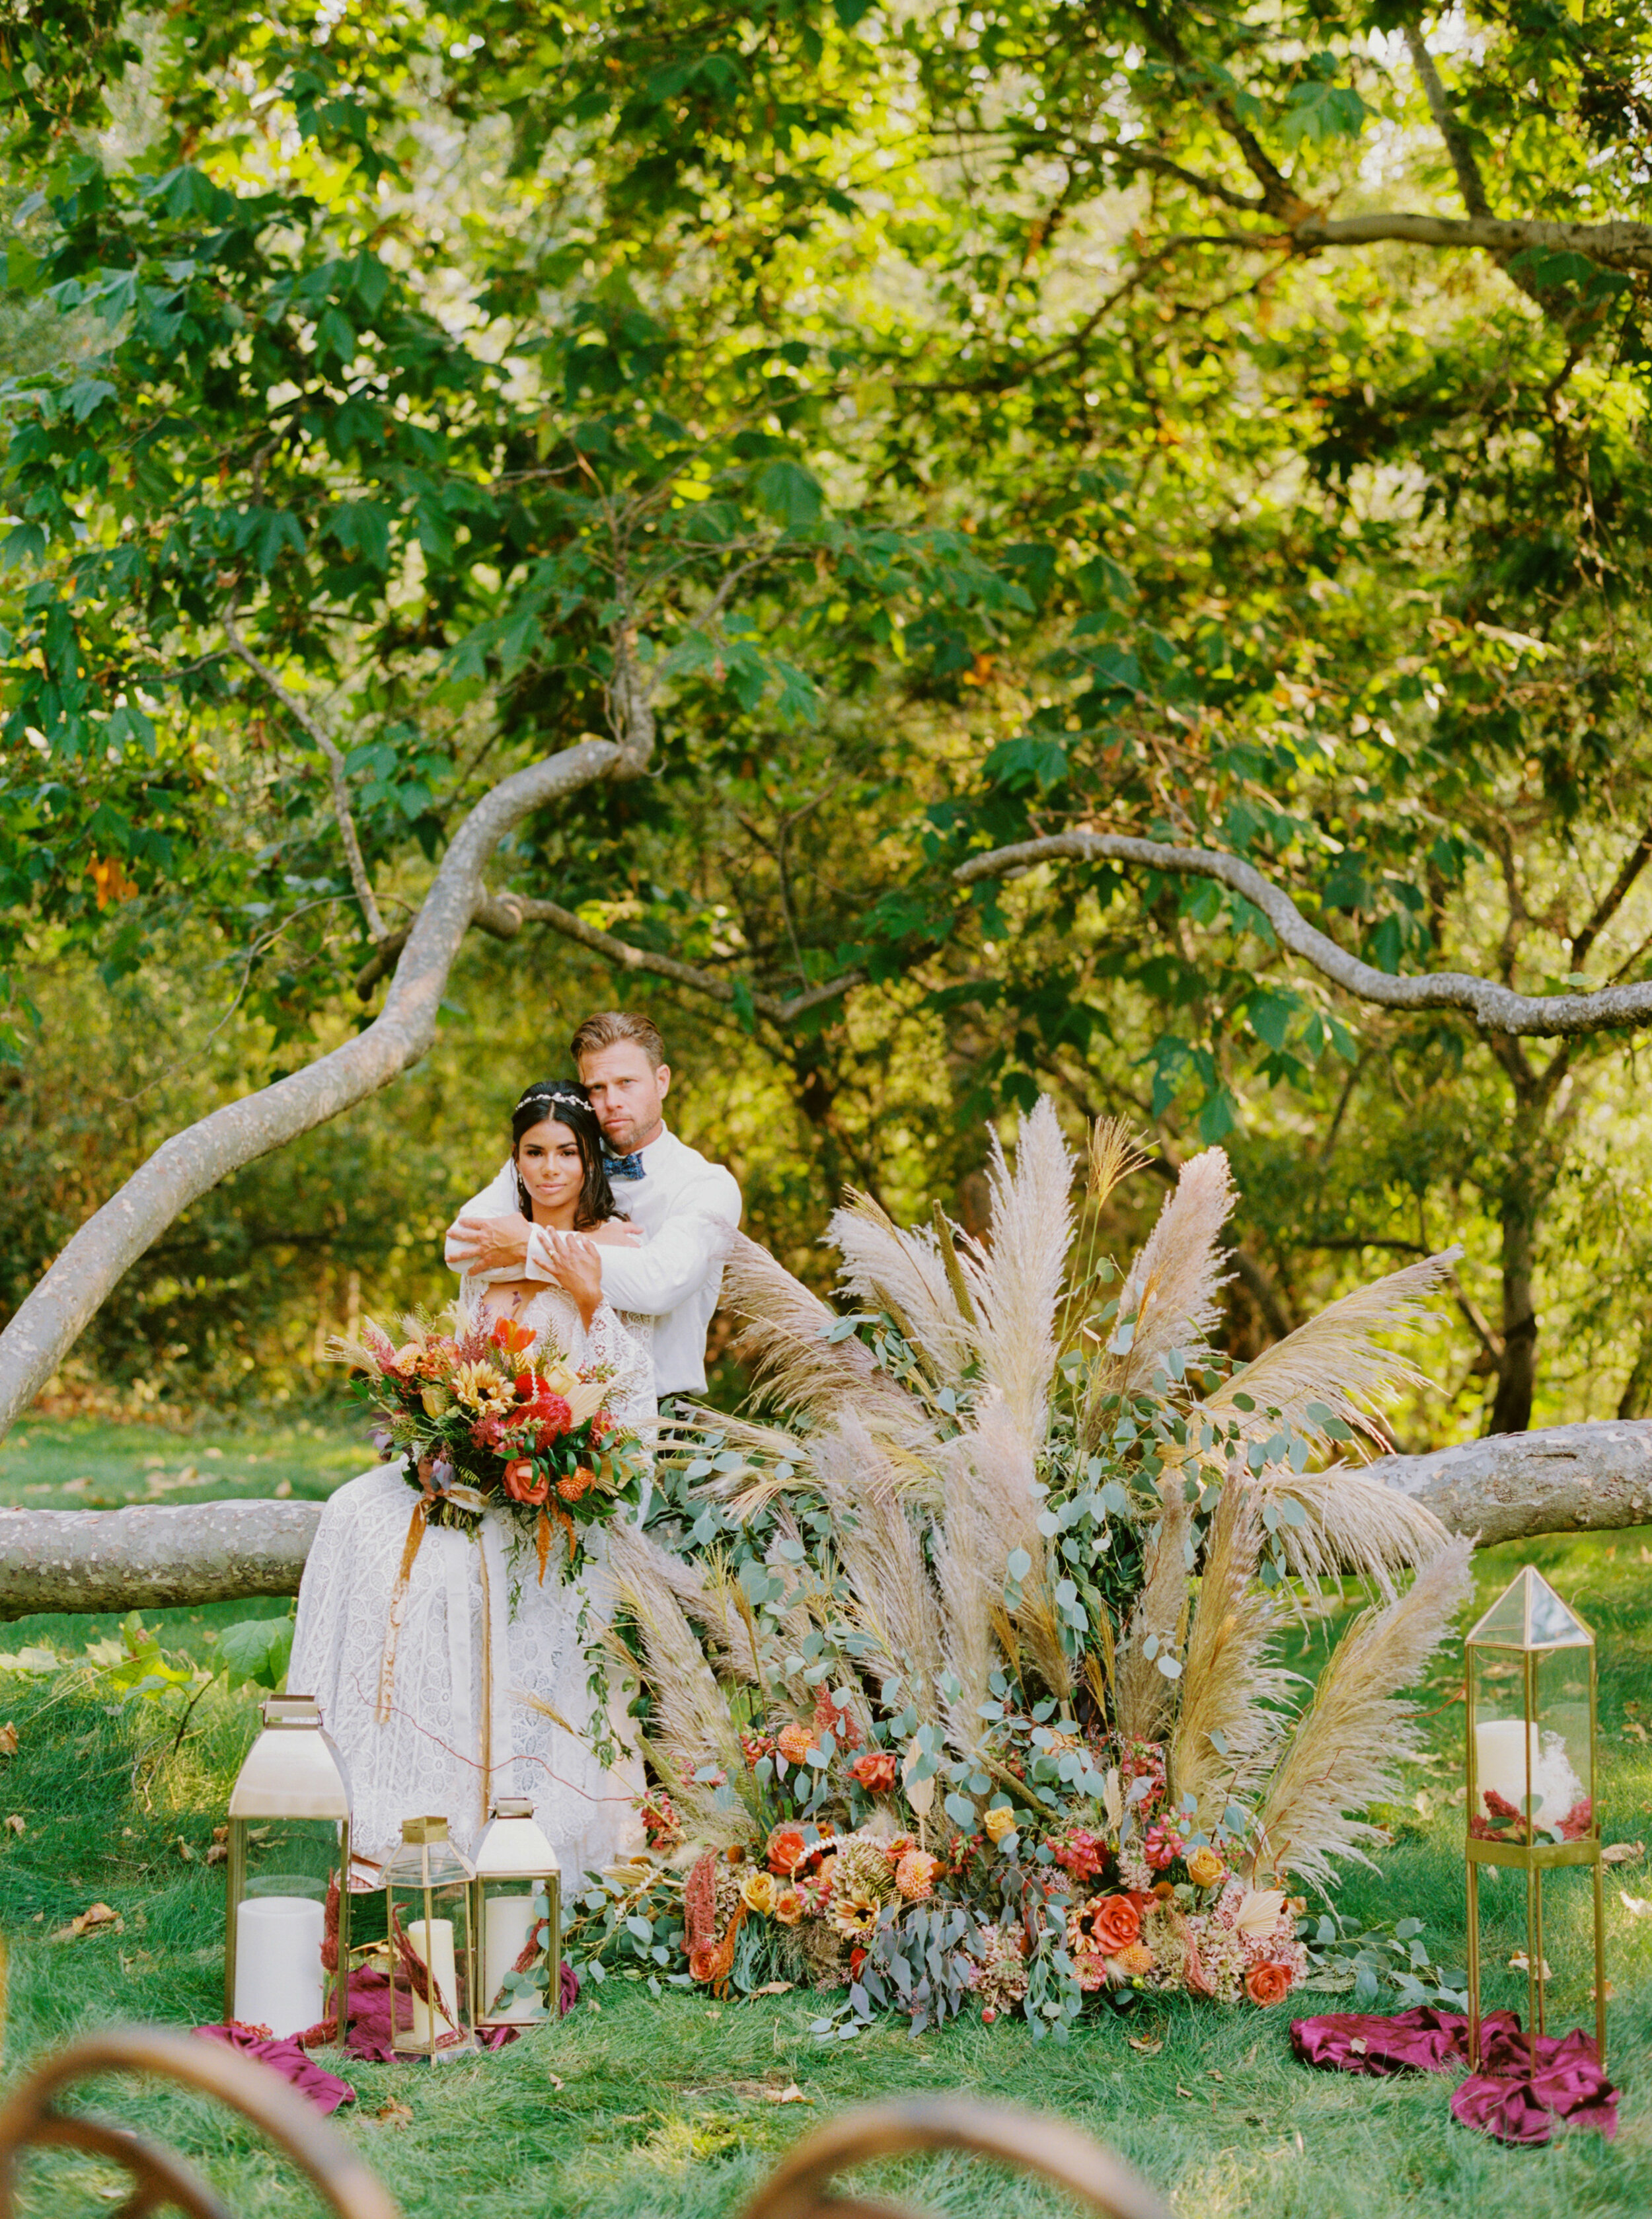 Sarahi Hadden - An Earthy Summer Boho Inspired Wedding with Sunset Hues at Gardener Ranch-3.jpg